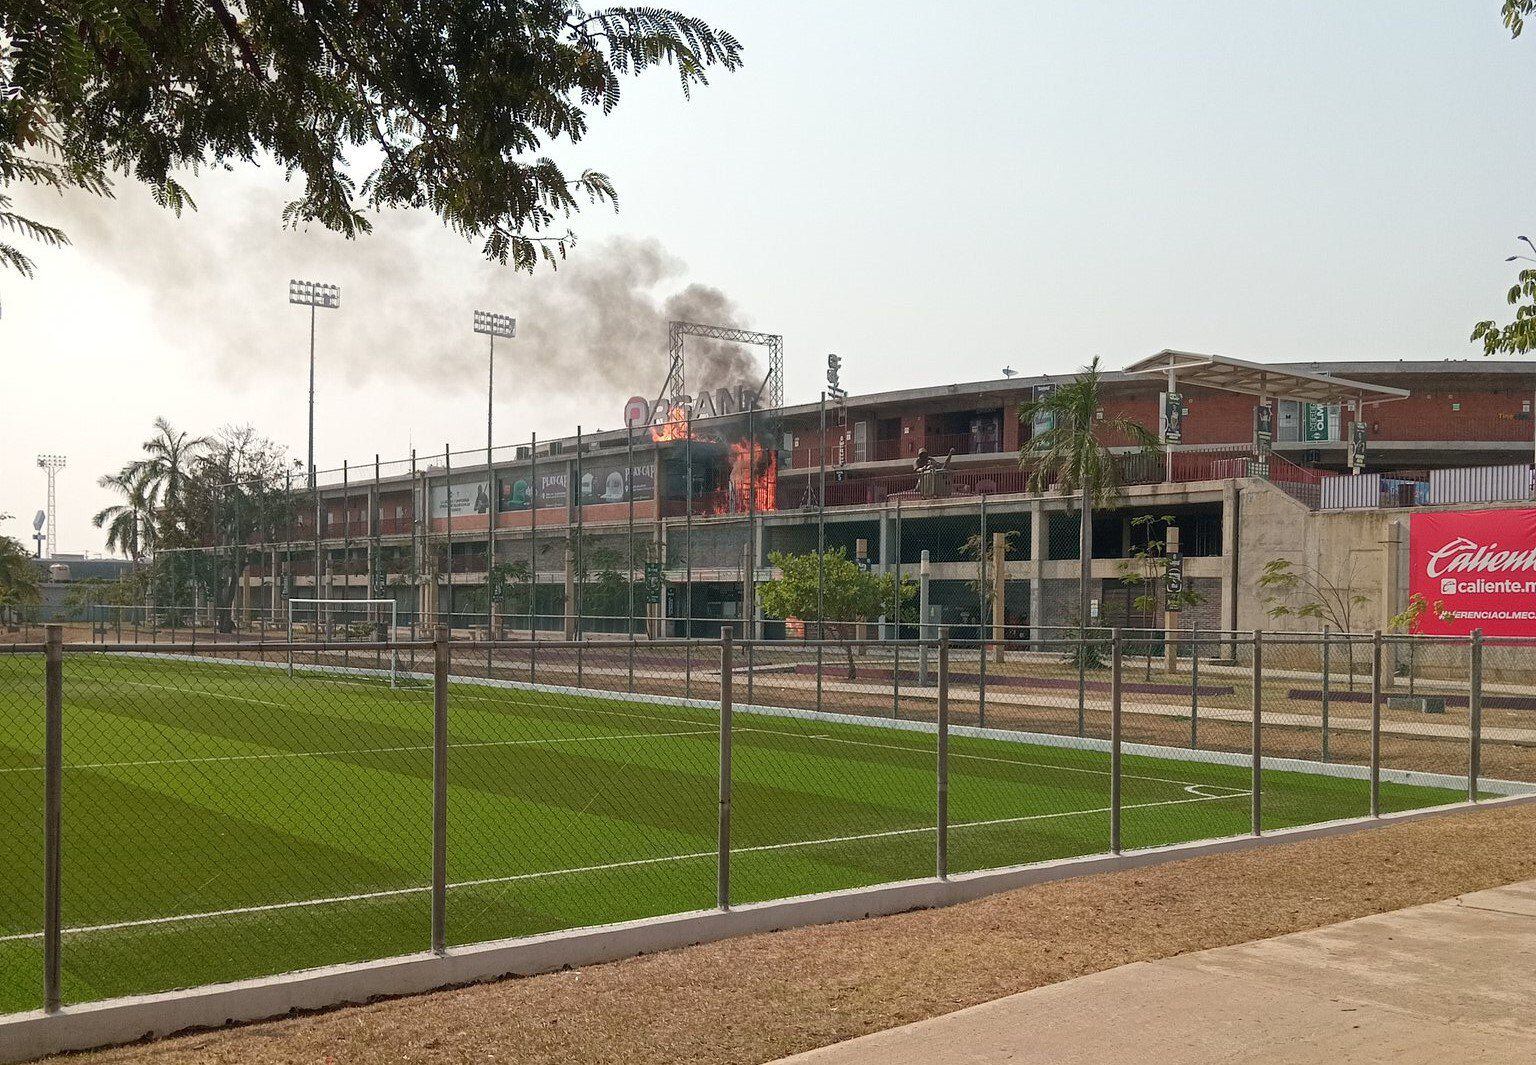 ¿Qué pasó en Tabasco? Explota tanque de gas en parque de beisbol centenario 27 de febrero